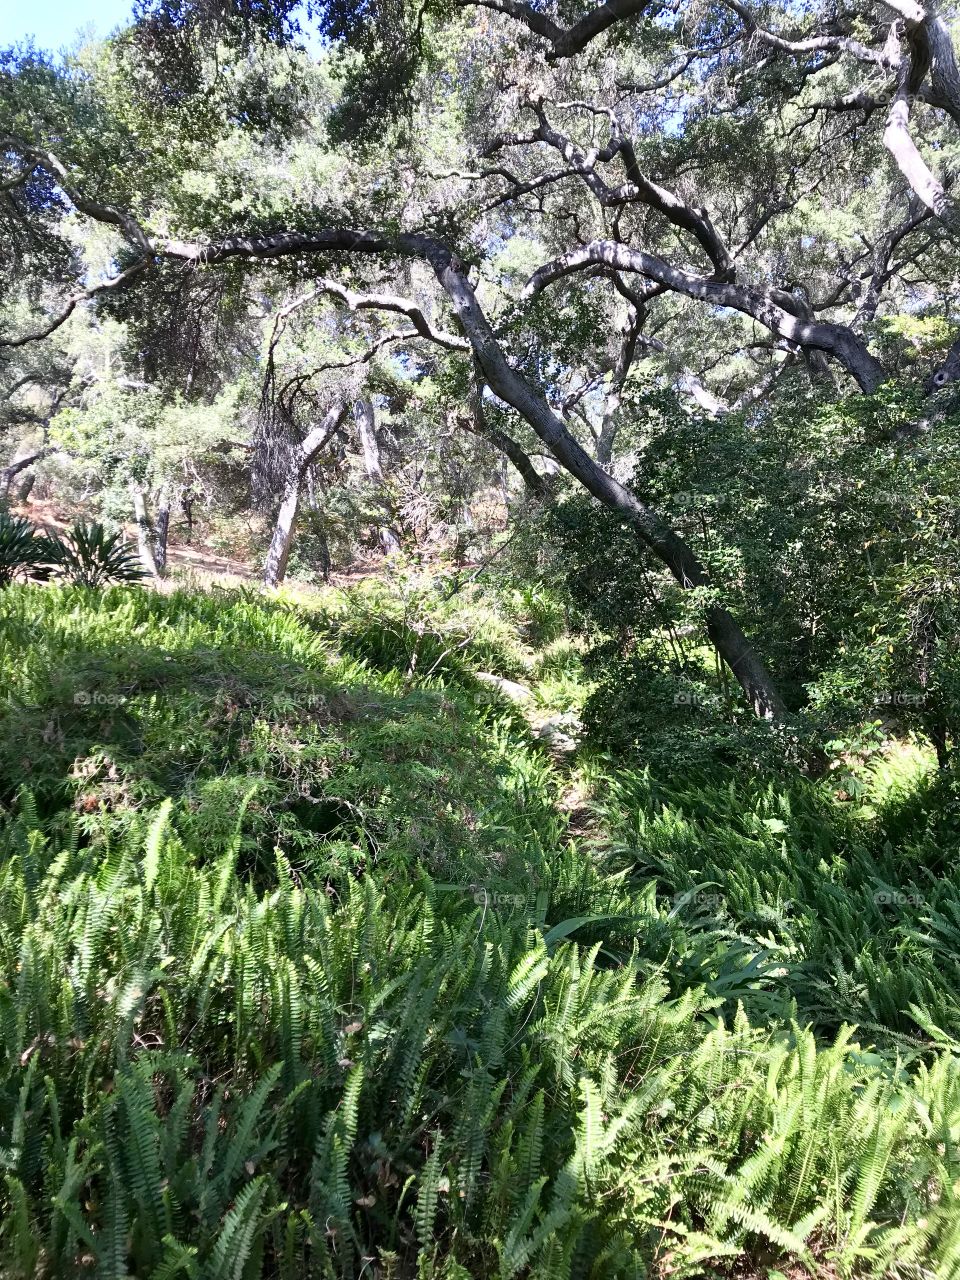 Ferns and oaks